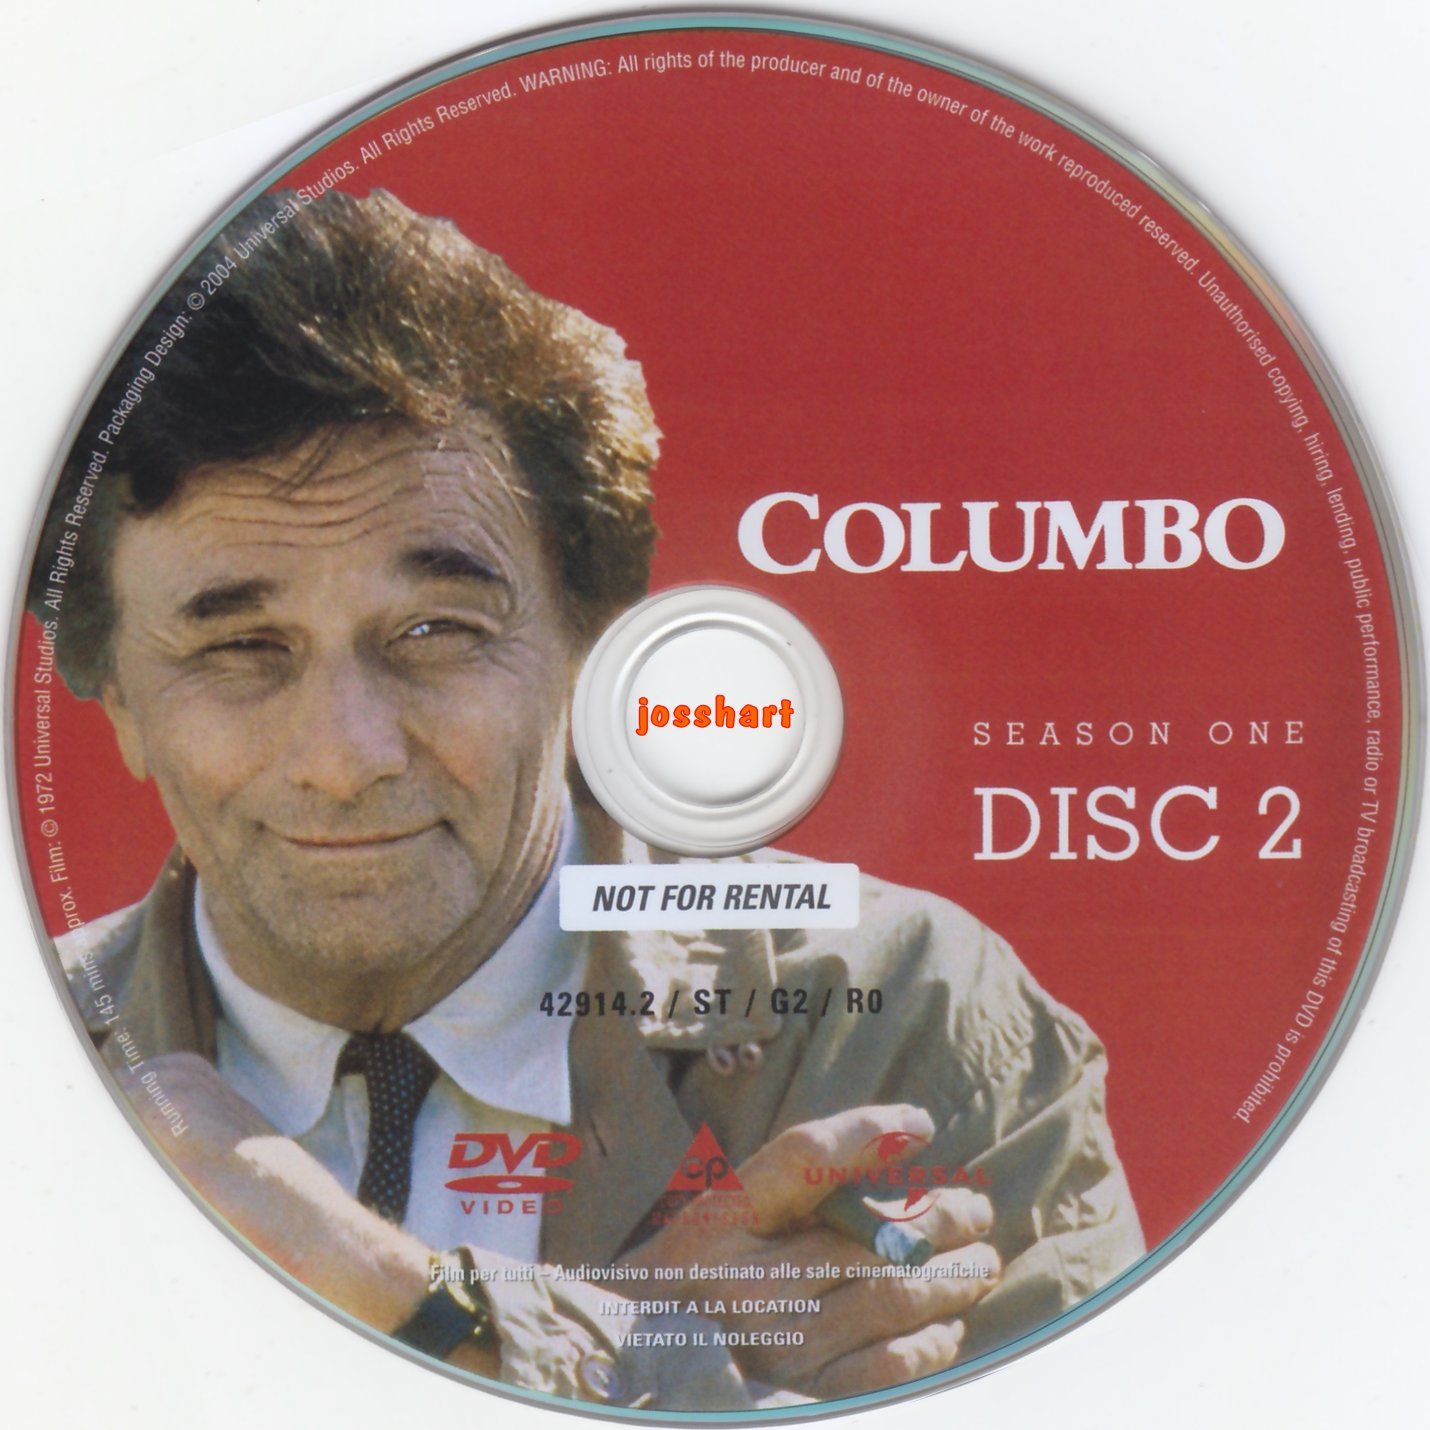 Columbo S1 DISC2